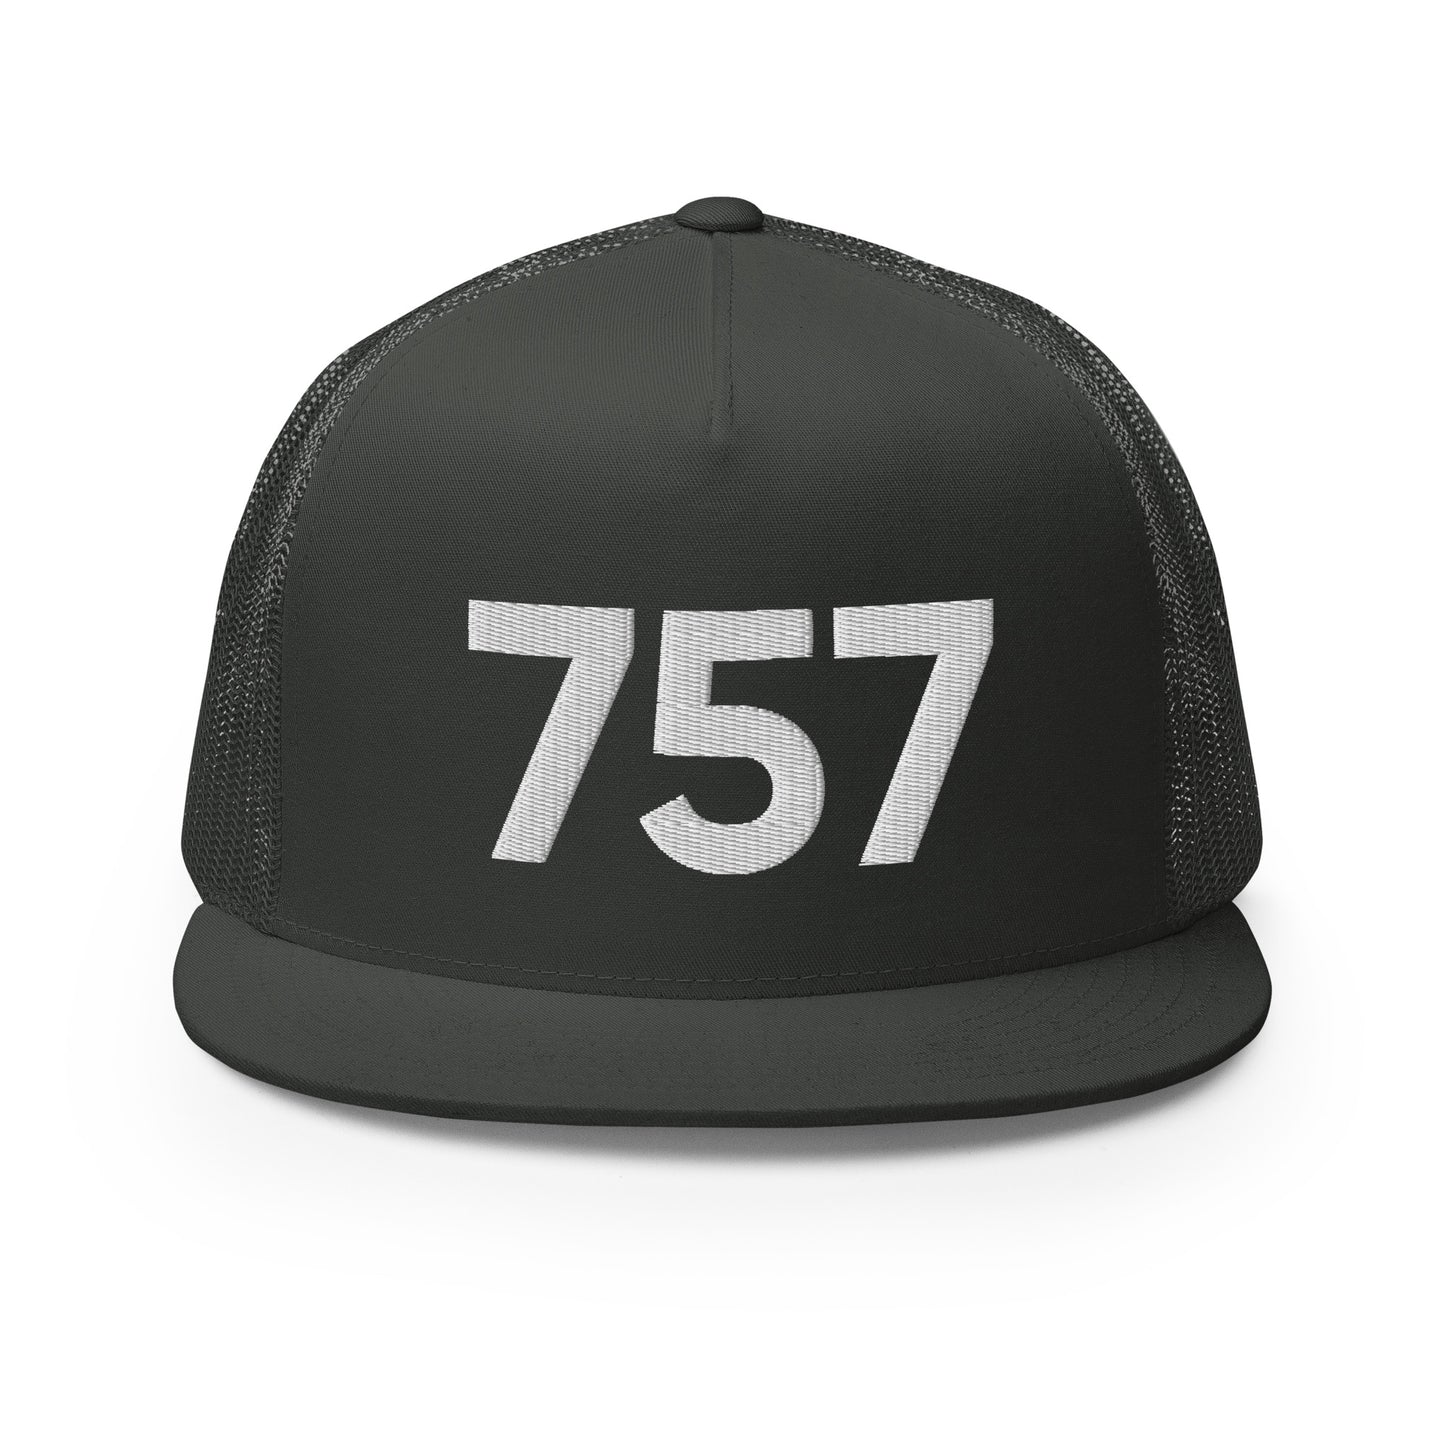 757 VB Trucker Hat